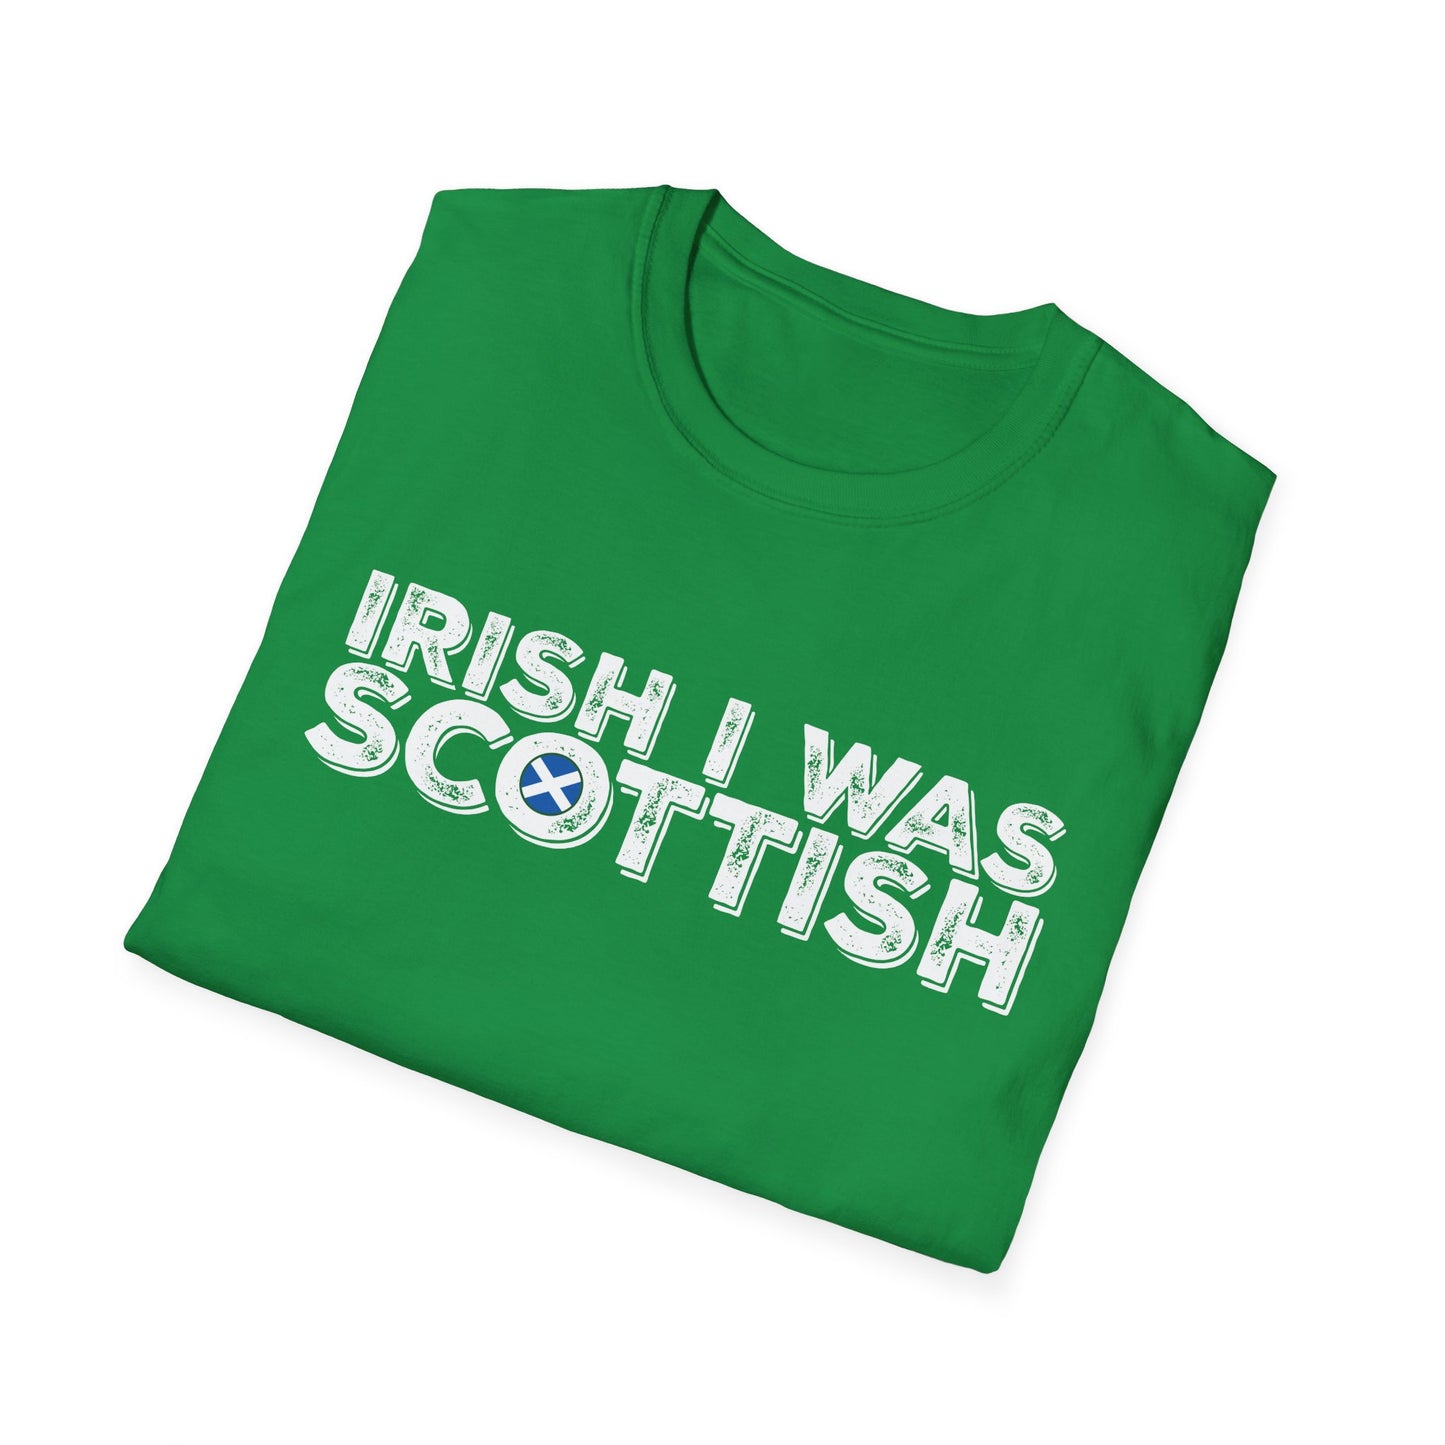 St. Patrick's Day Shirt, Irish I Was Scottish, Unisex Gildan Tee